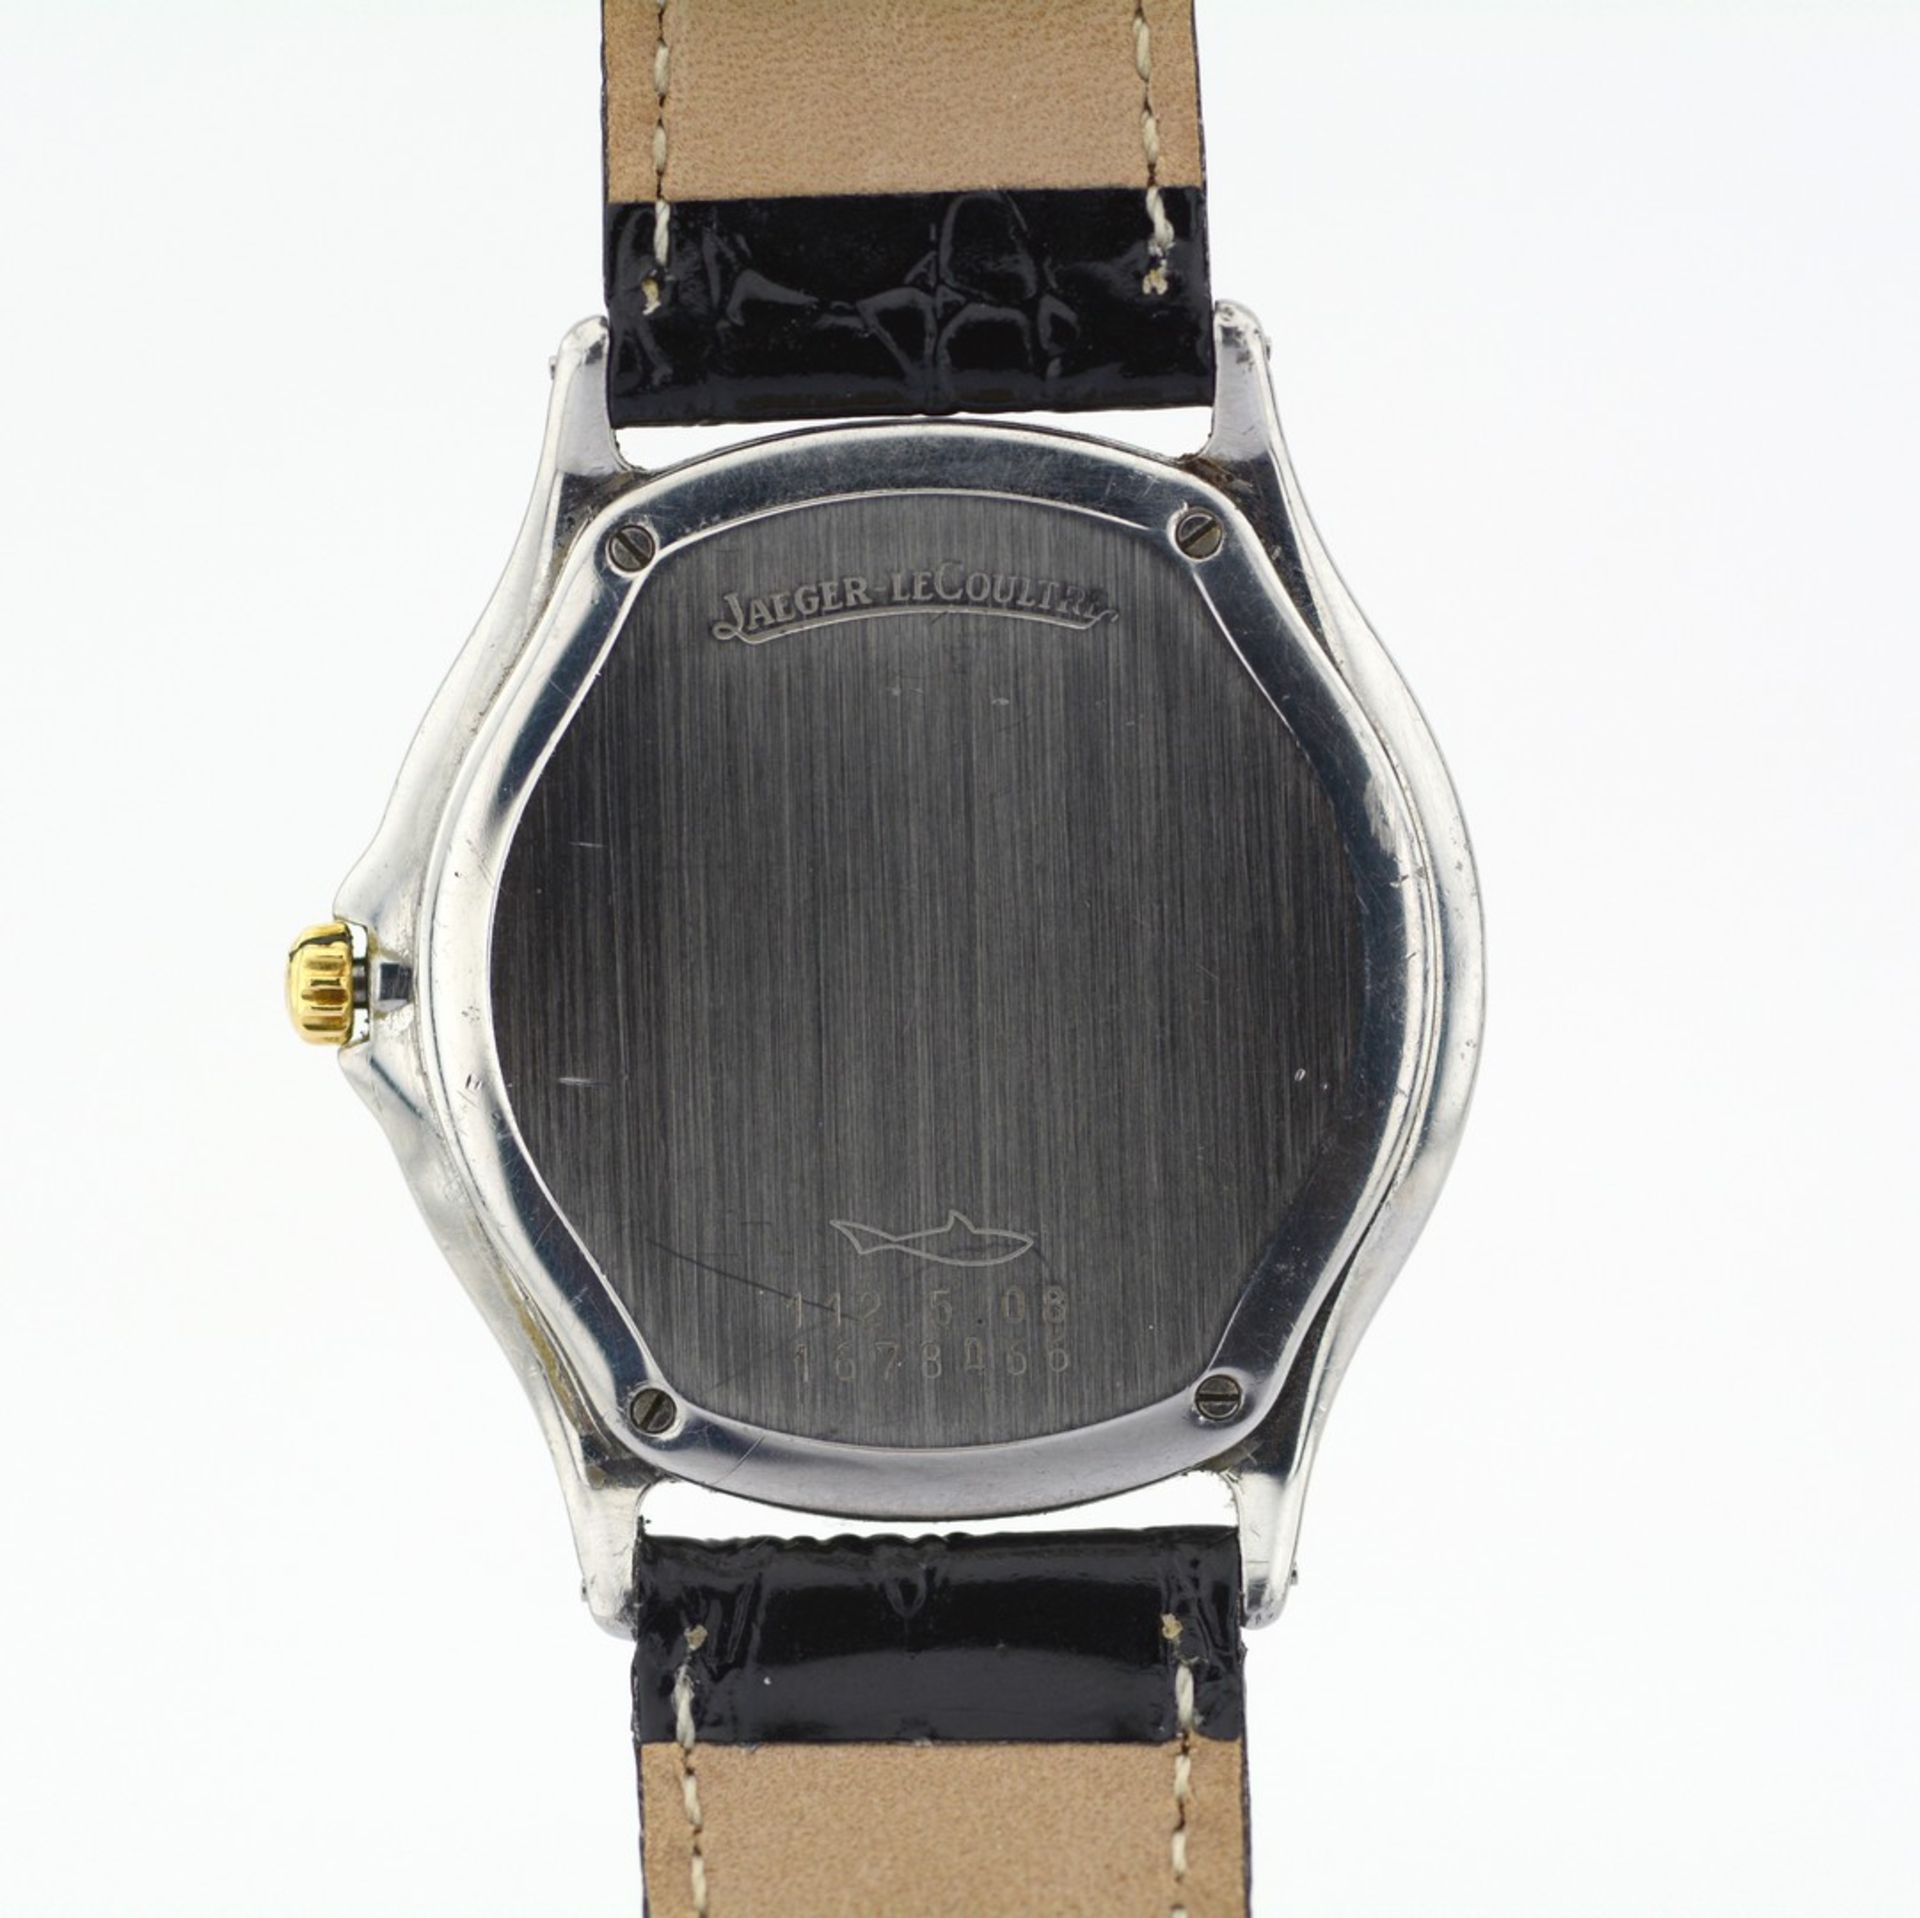 Jaeger / Heraion - Gentlmen's Gold/Steel Wrist Watch - Image 3 of 10